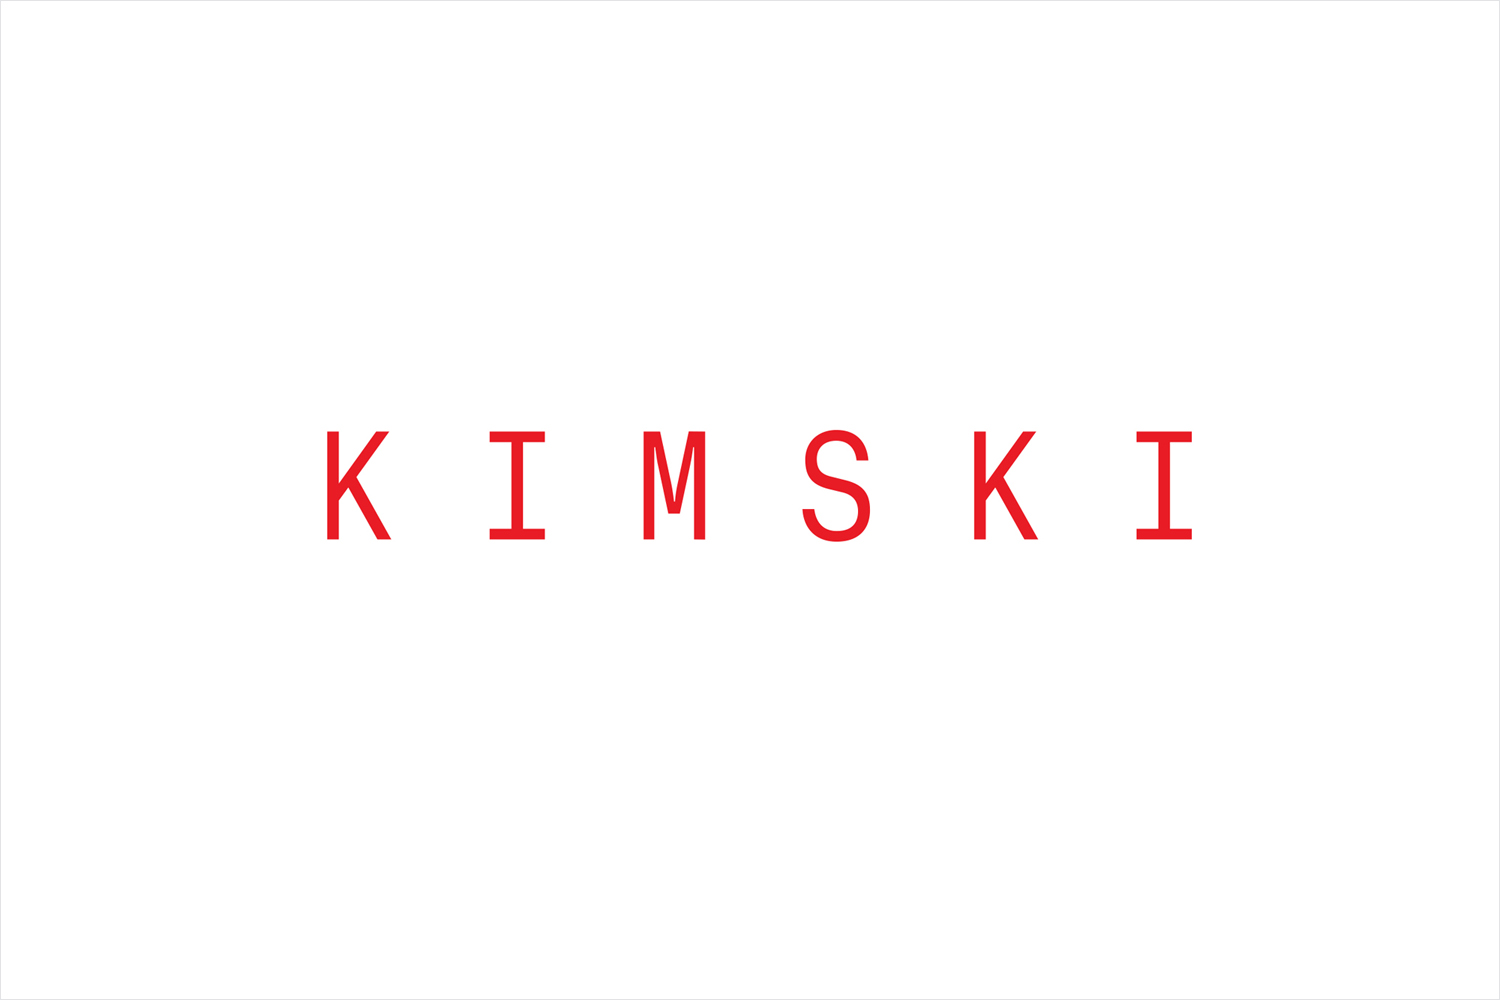 Logotype by New York studio Franklyn for Chicago’s Korean Polish street food restaurant Kimski